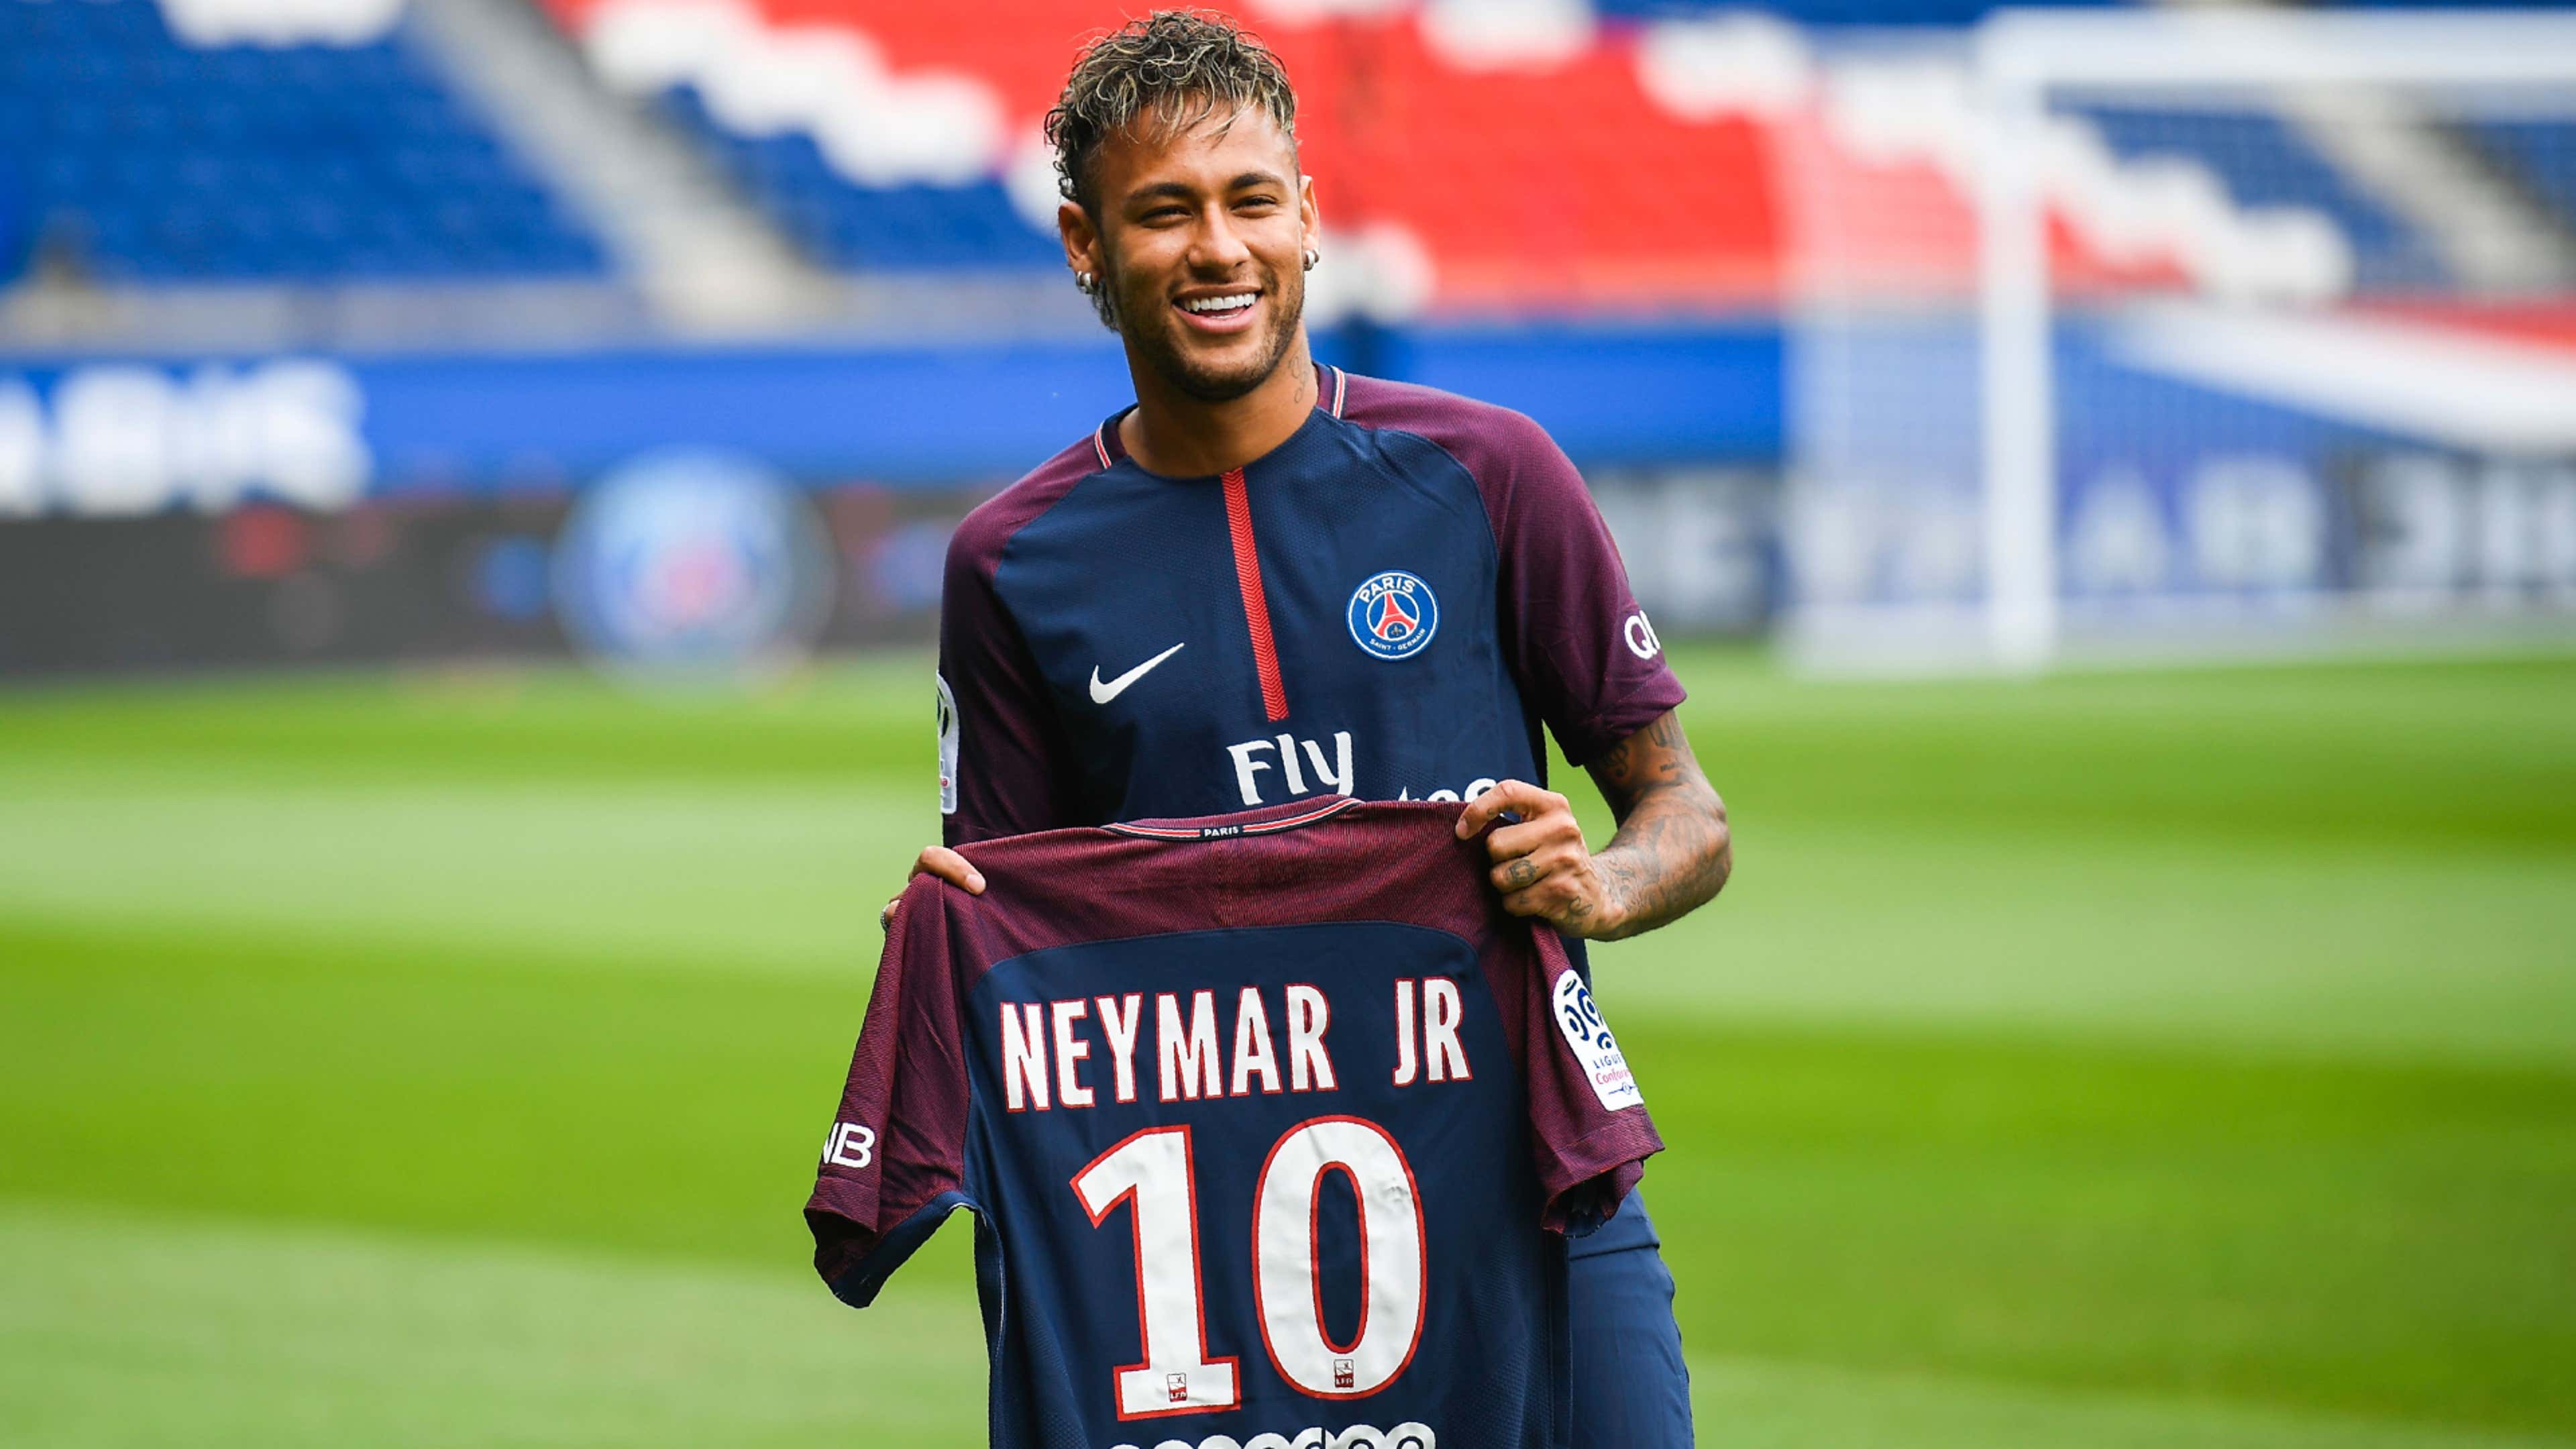 Neymar transfert PSG 222 M€